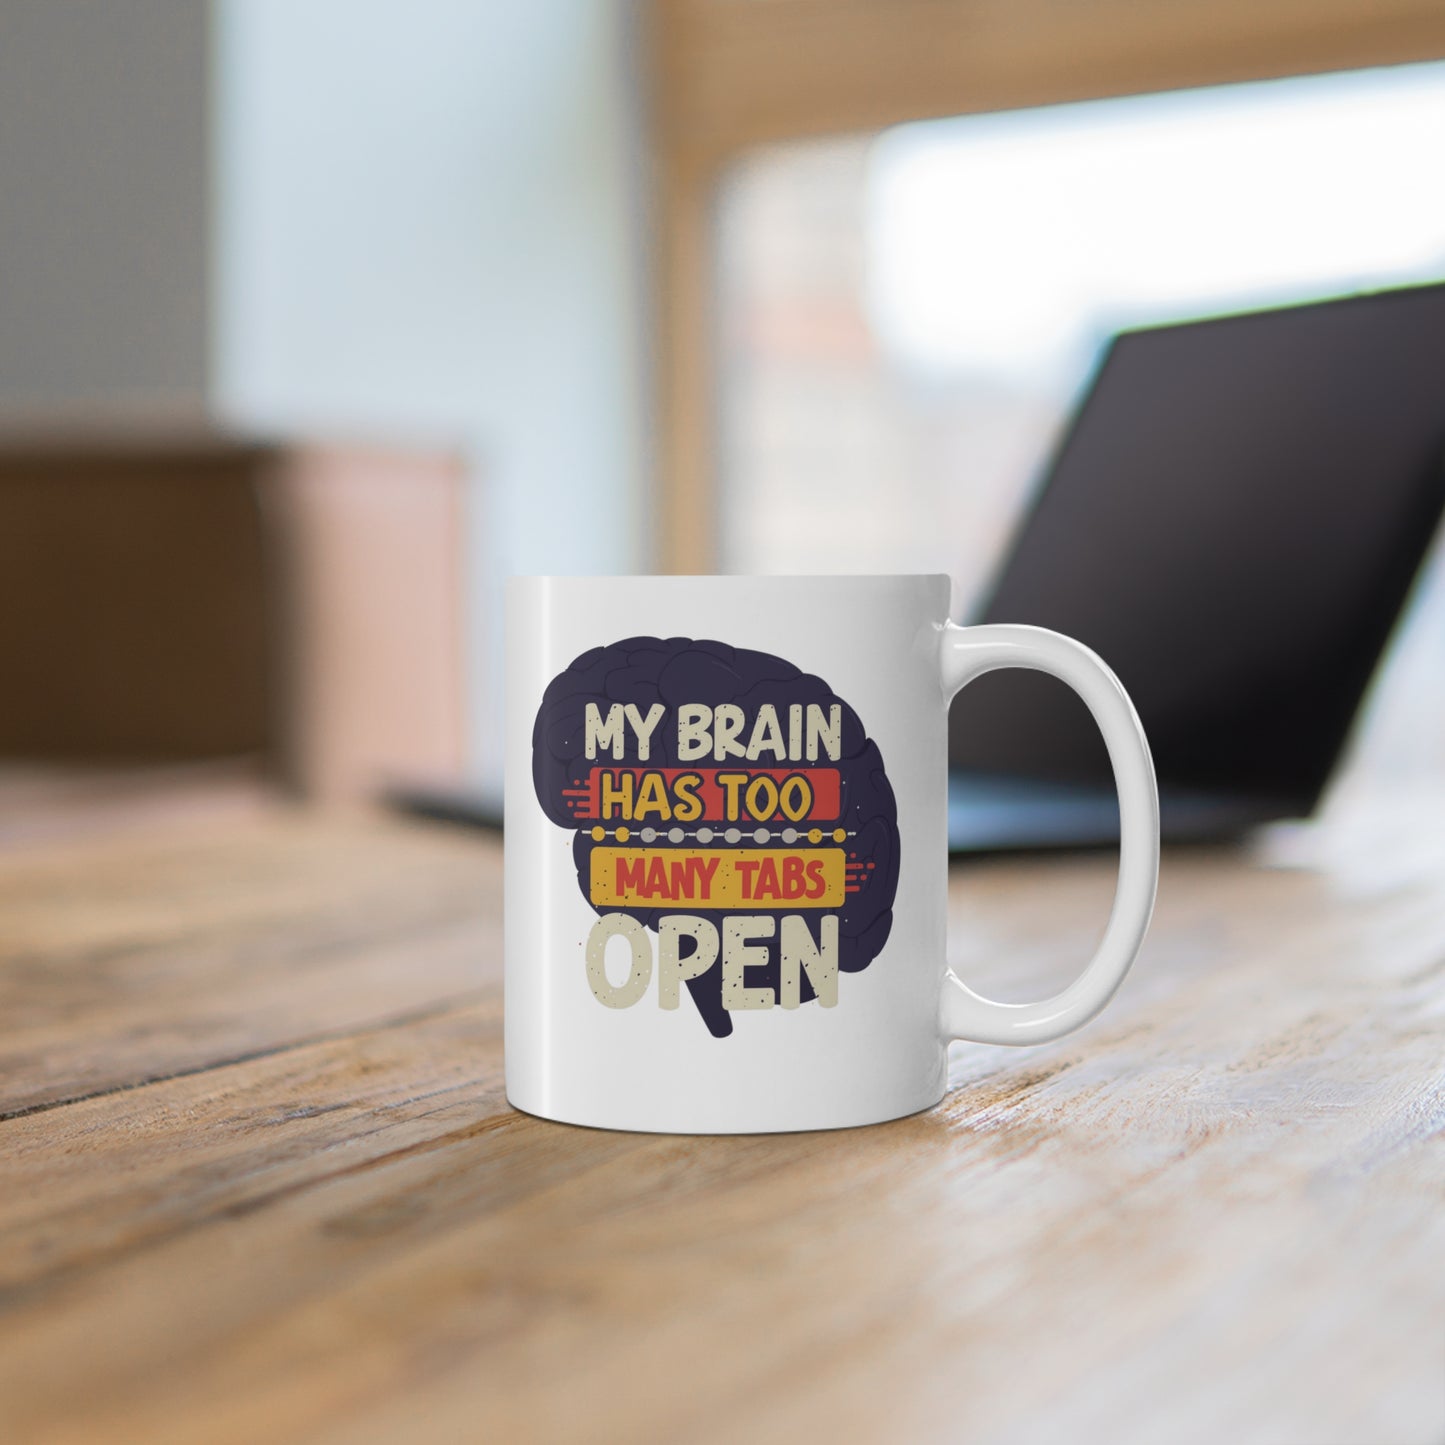 My Brain Has Too Many Tabs Open - ADHD mug - Fidget and Focus